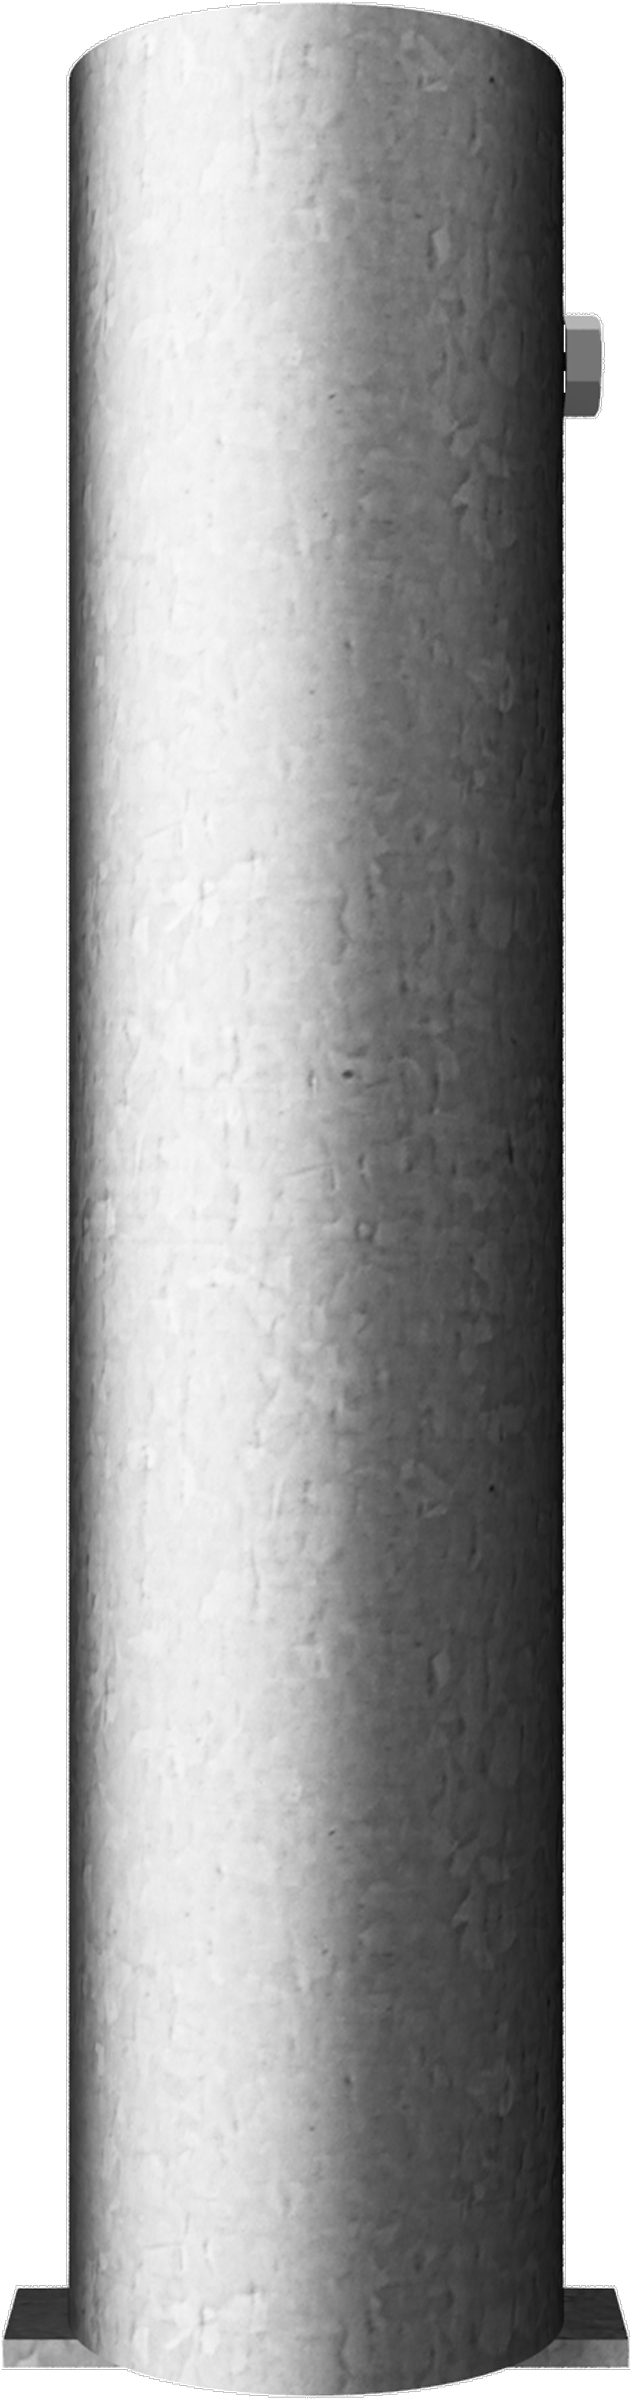 Schake Bodenhülse für Ø 76 mm herausnehmbare Pfosten